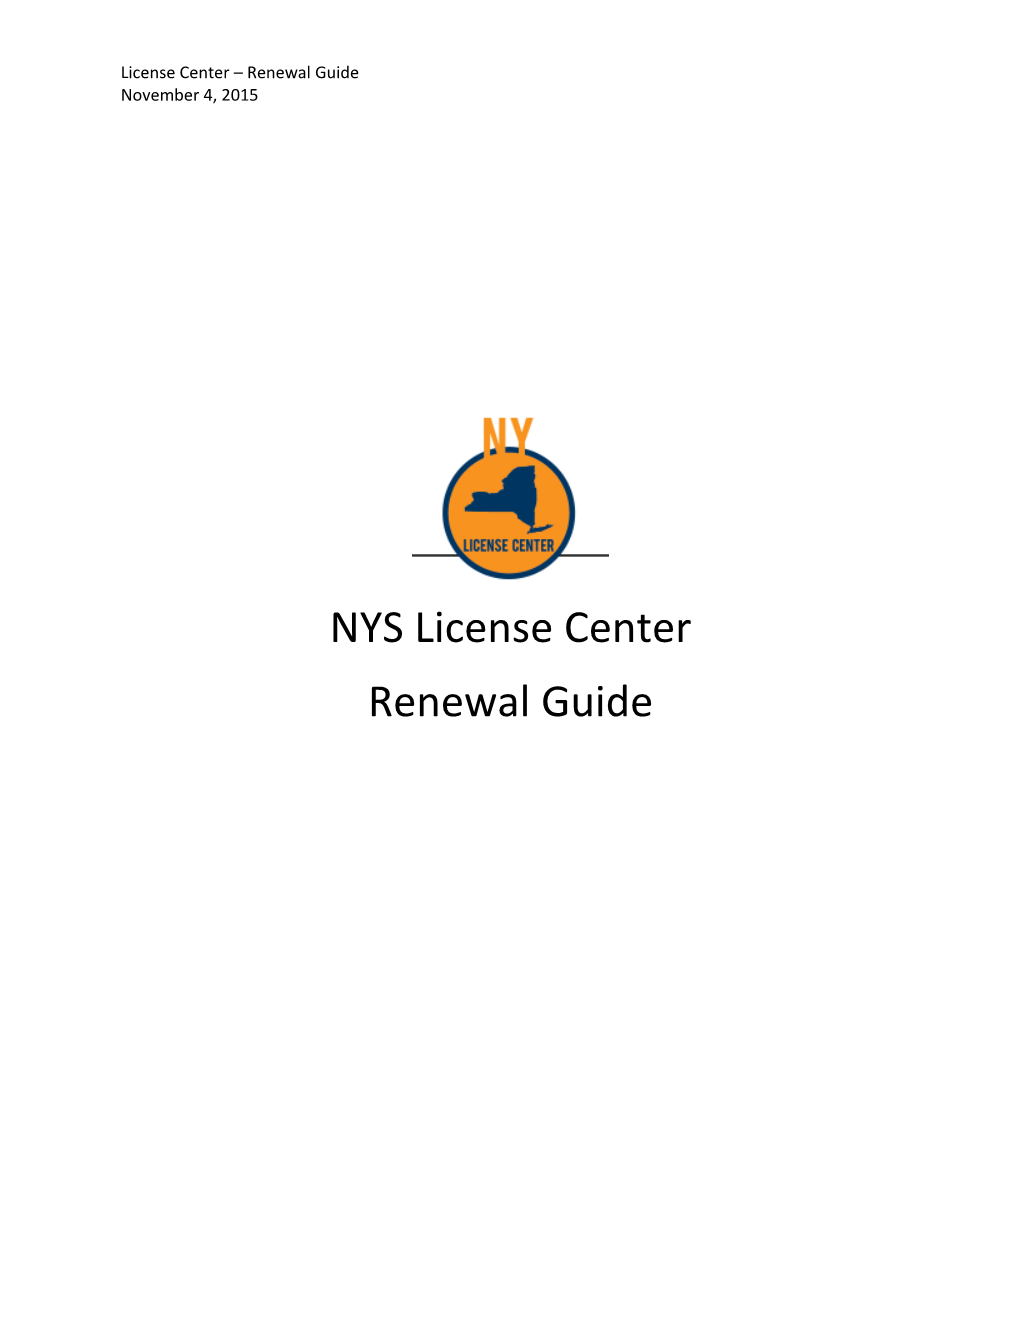 License Center Renewal Guide